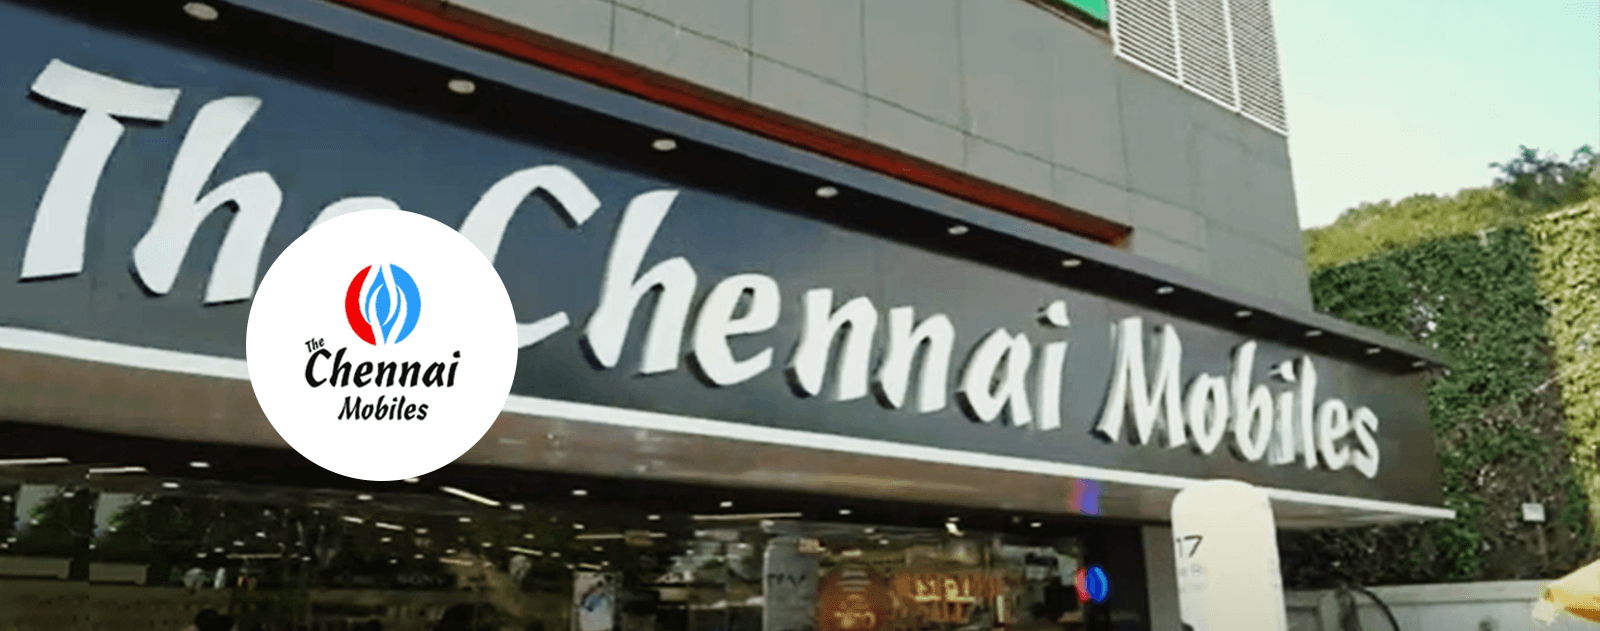 Pine Labs Merchants Success Stories: The Chennai Mobile